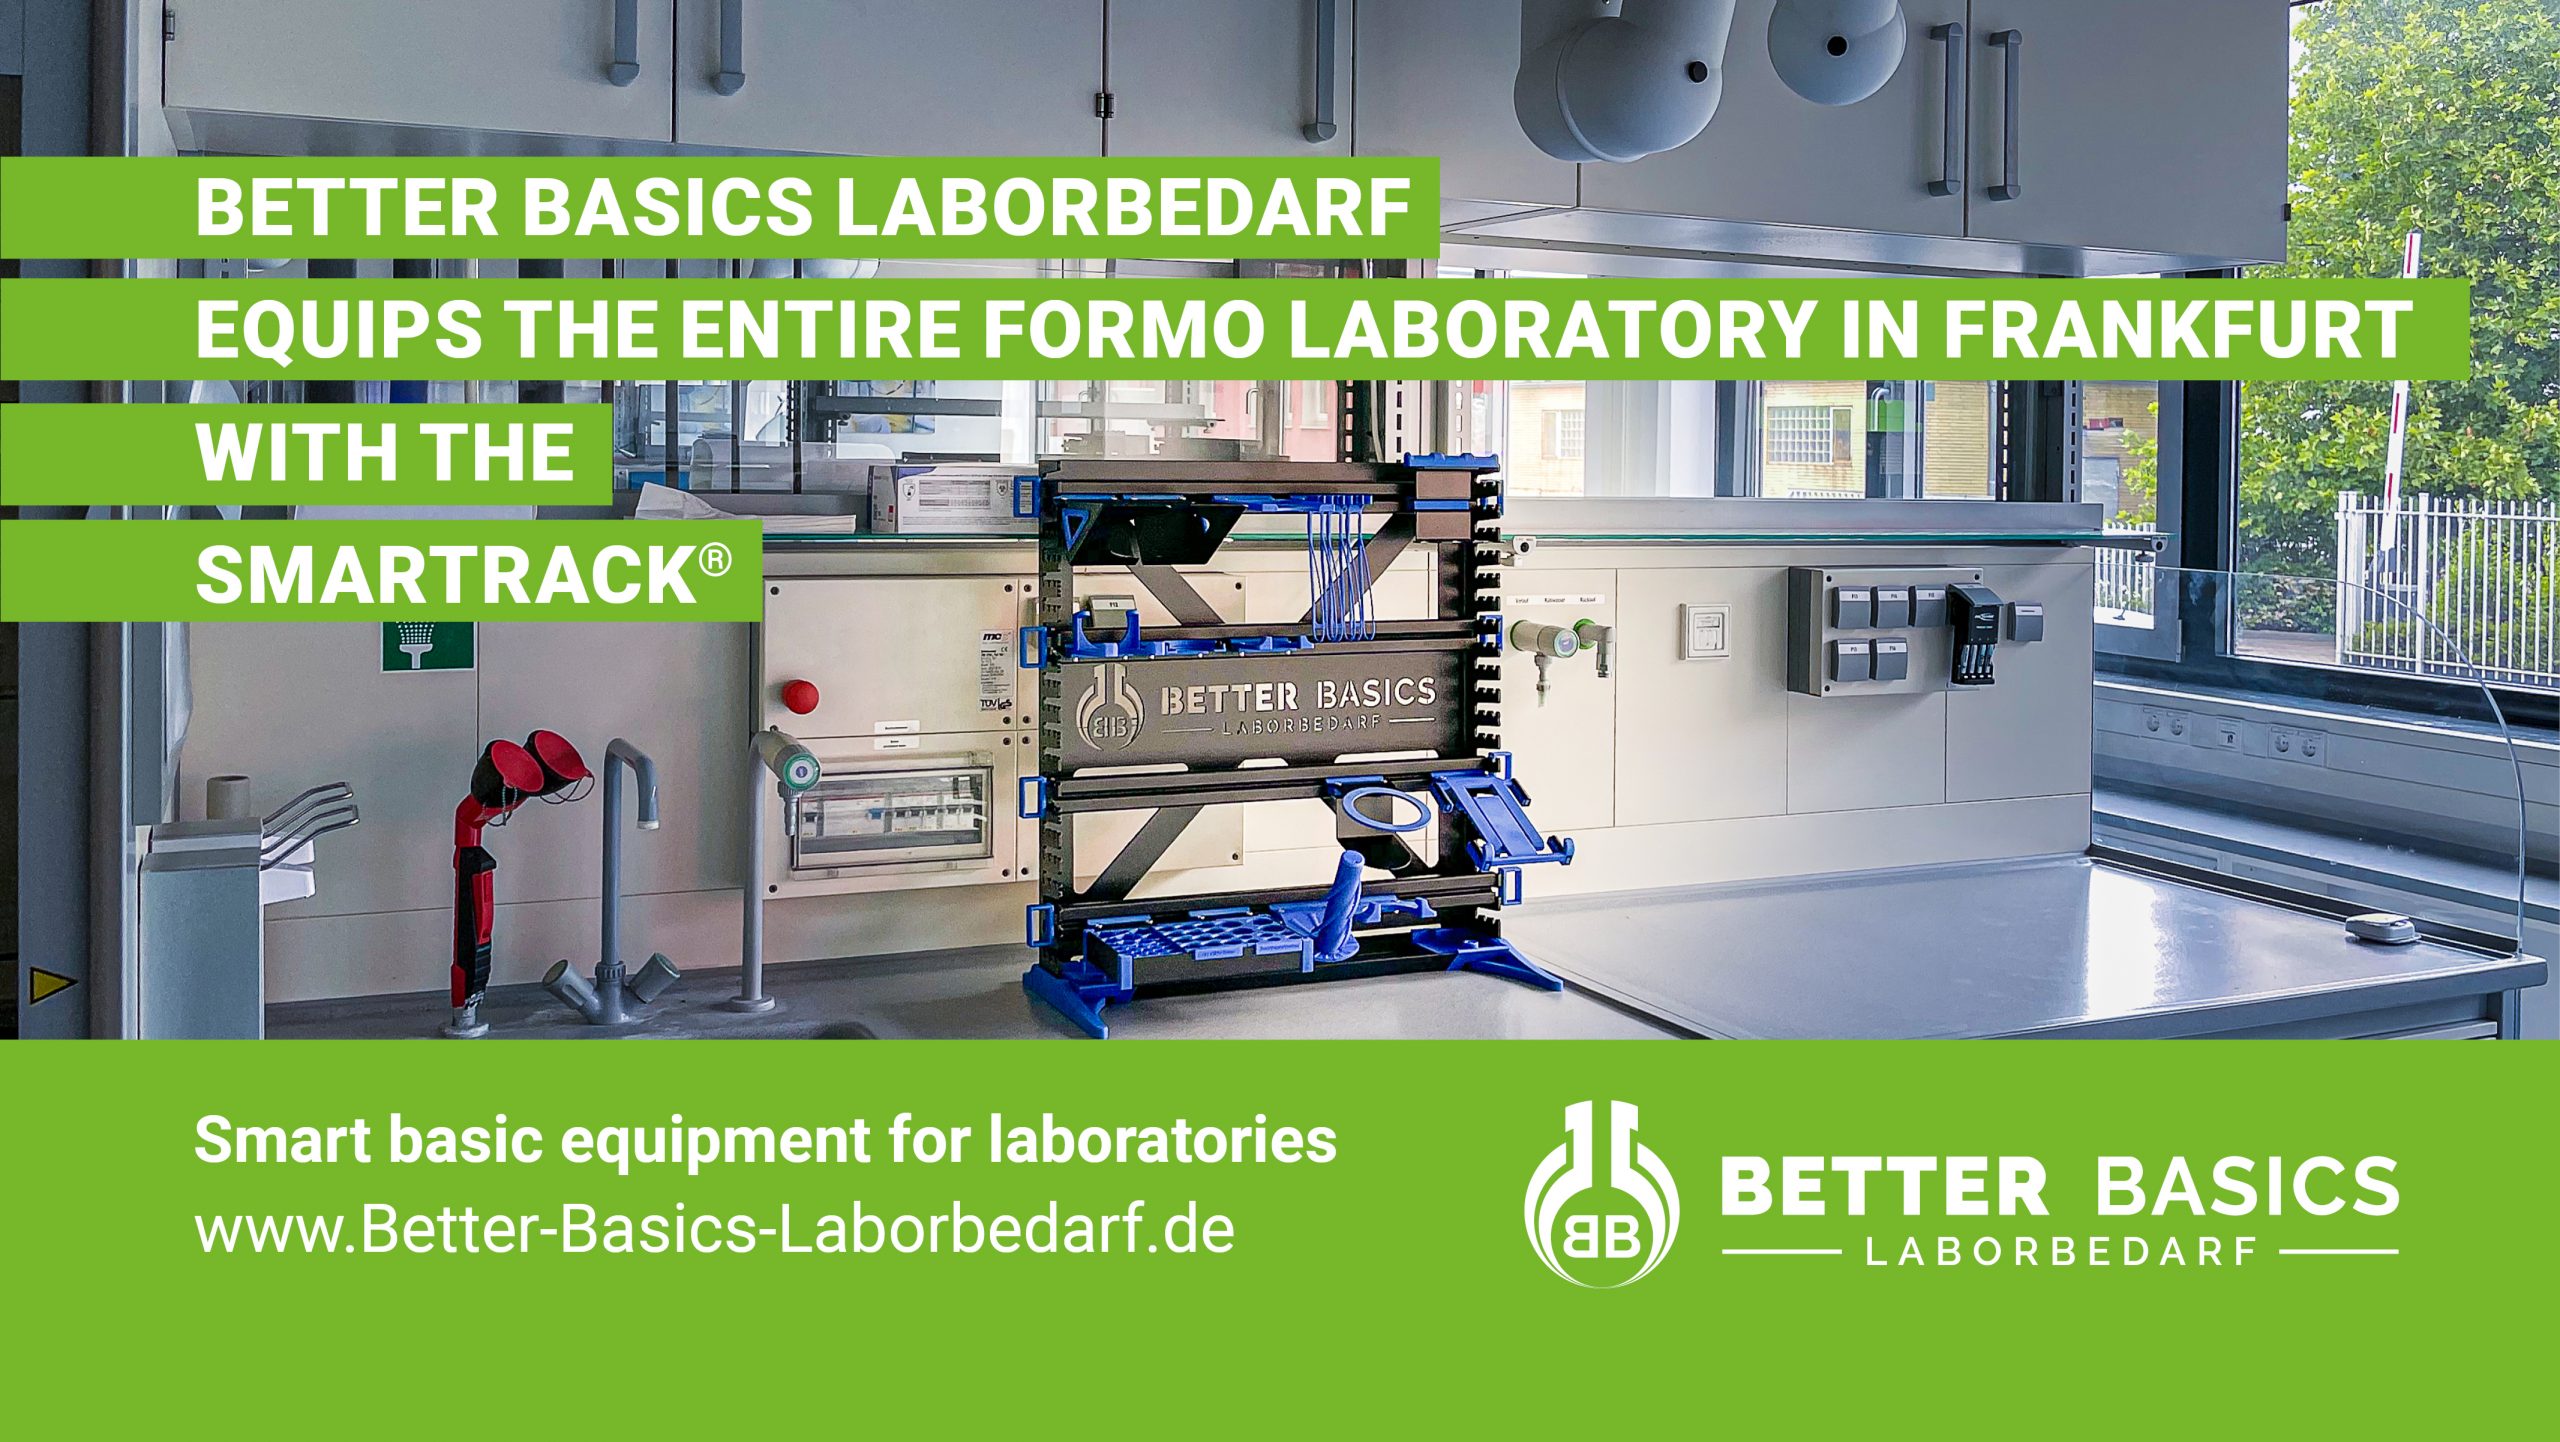 Better Basics Laborbedarf GmbH News Beitrag EN- Better Basics Laborbedarf equips the FORMO Laboratory in Frankfurt with the Smartrack